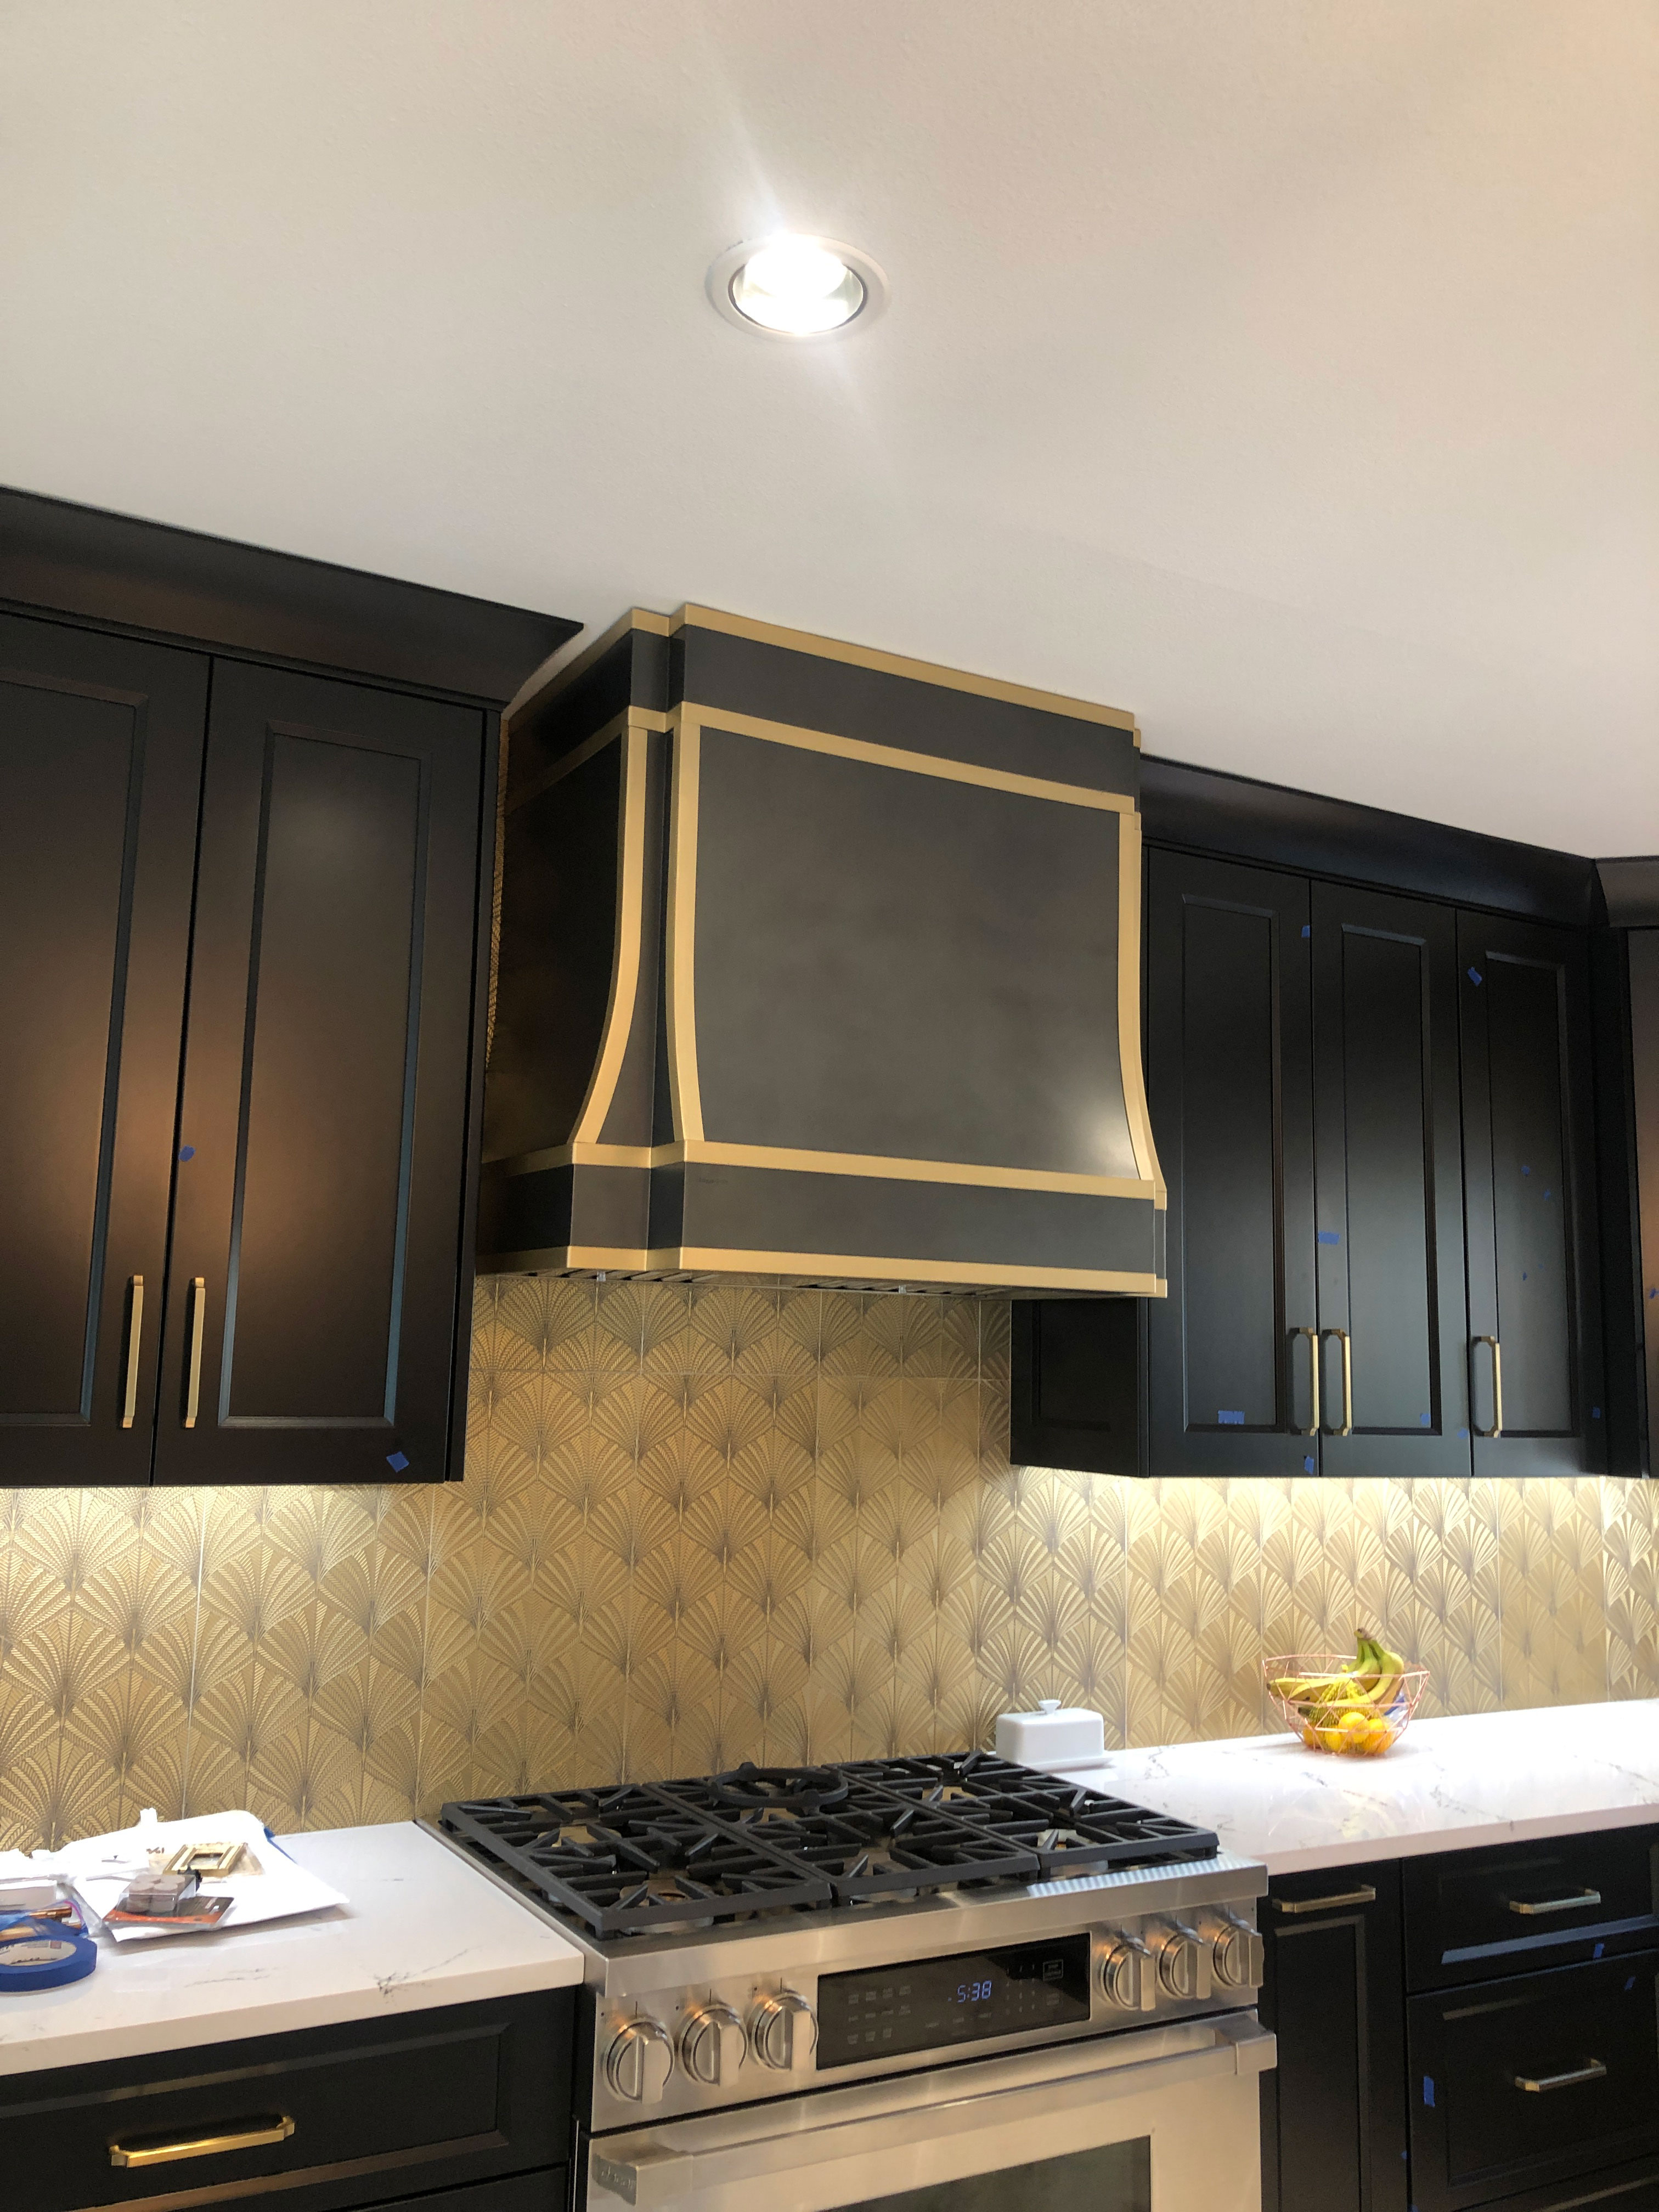 Kitchen design idea including range hood with grey kitchen cabinets, sleek white kitchen countertops andcaptivating copper backsplash